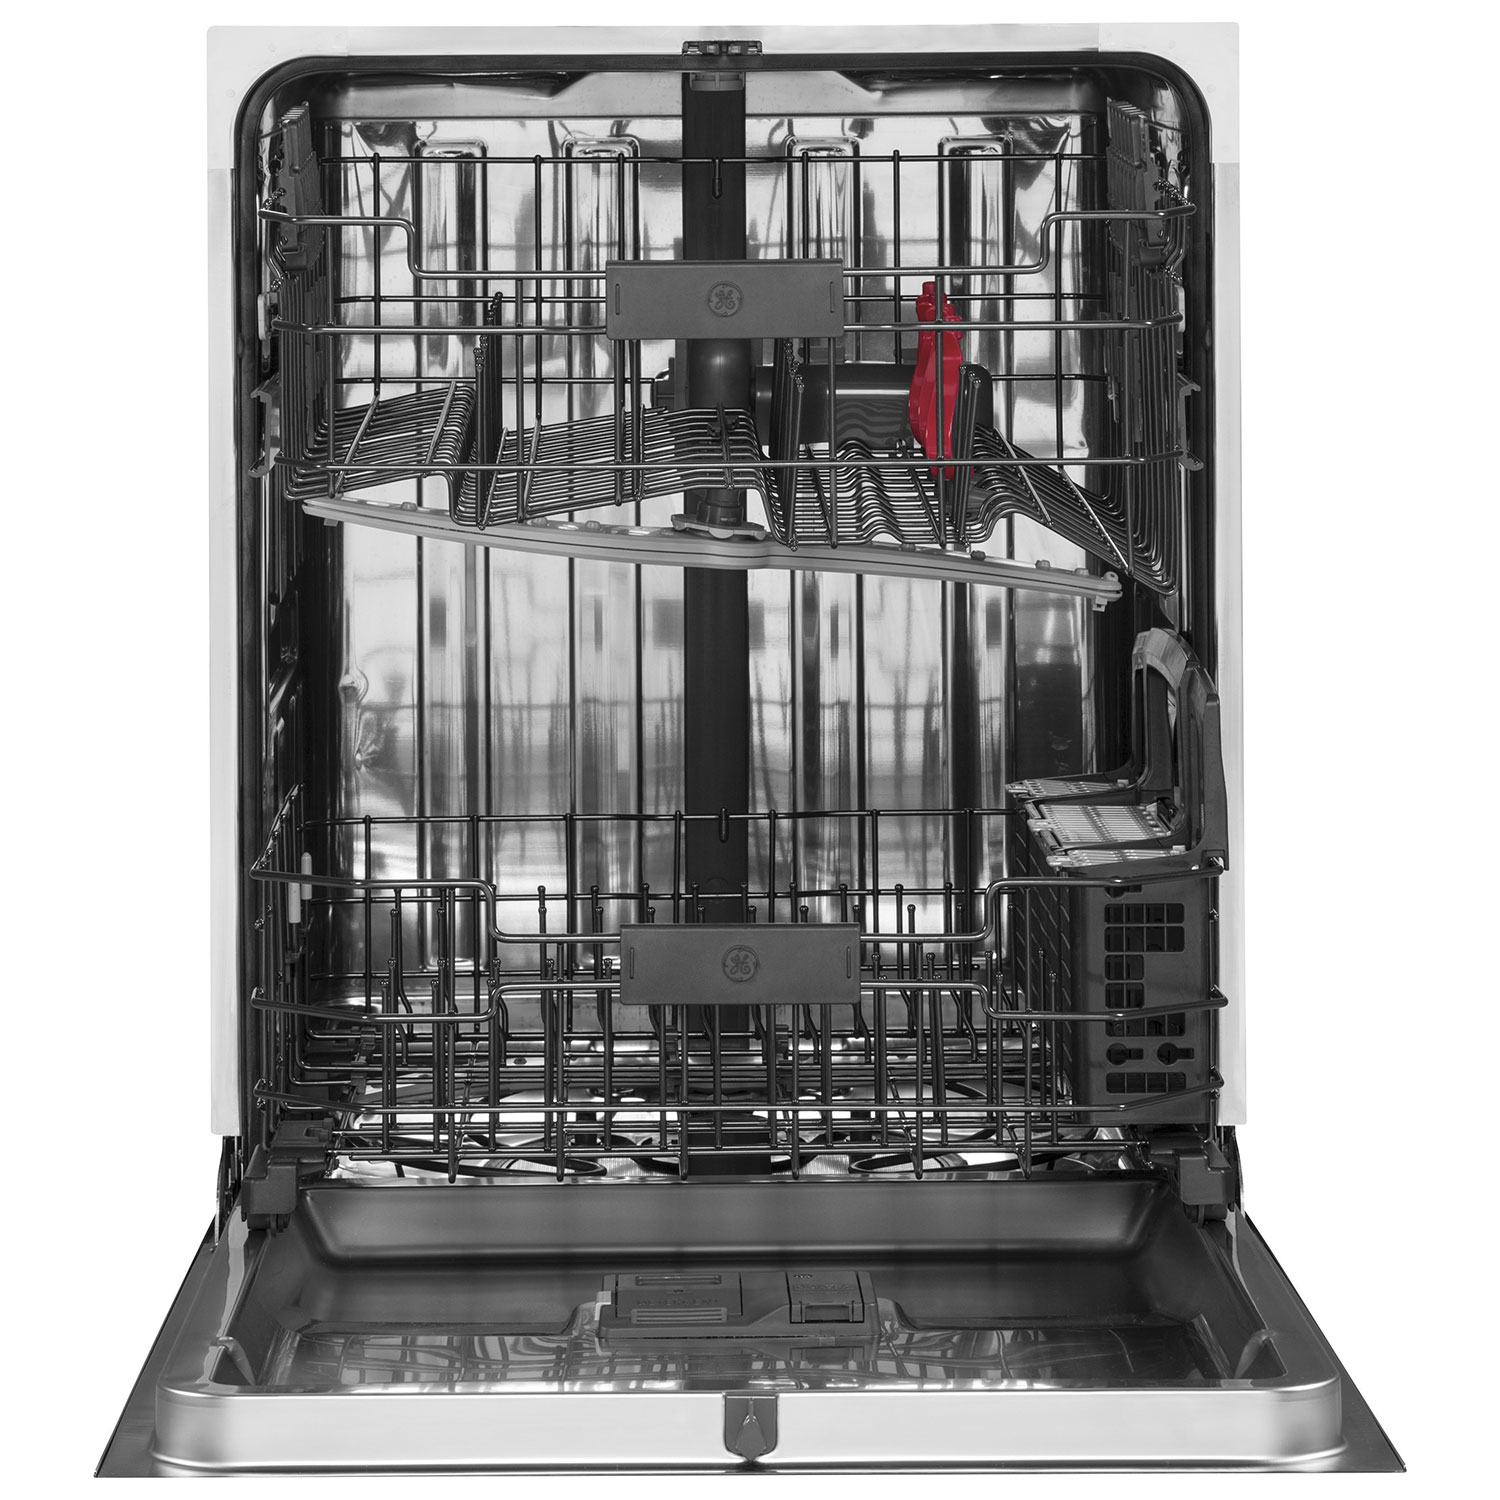 GE Stainless Steel dishwasher